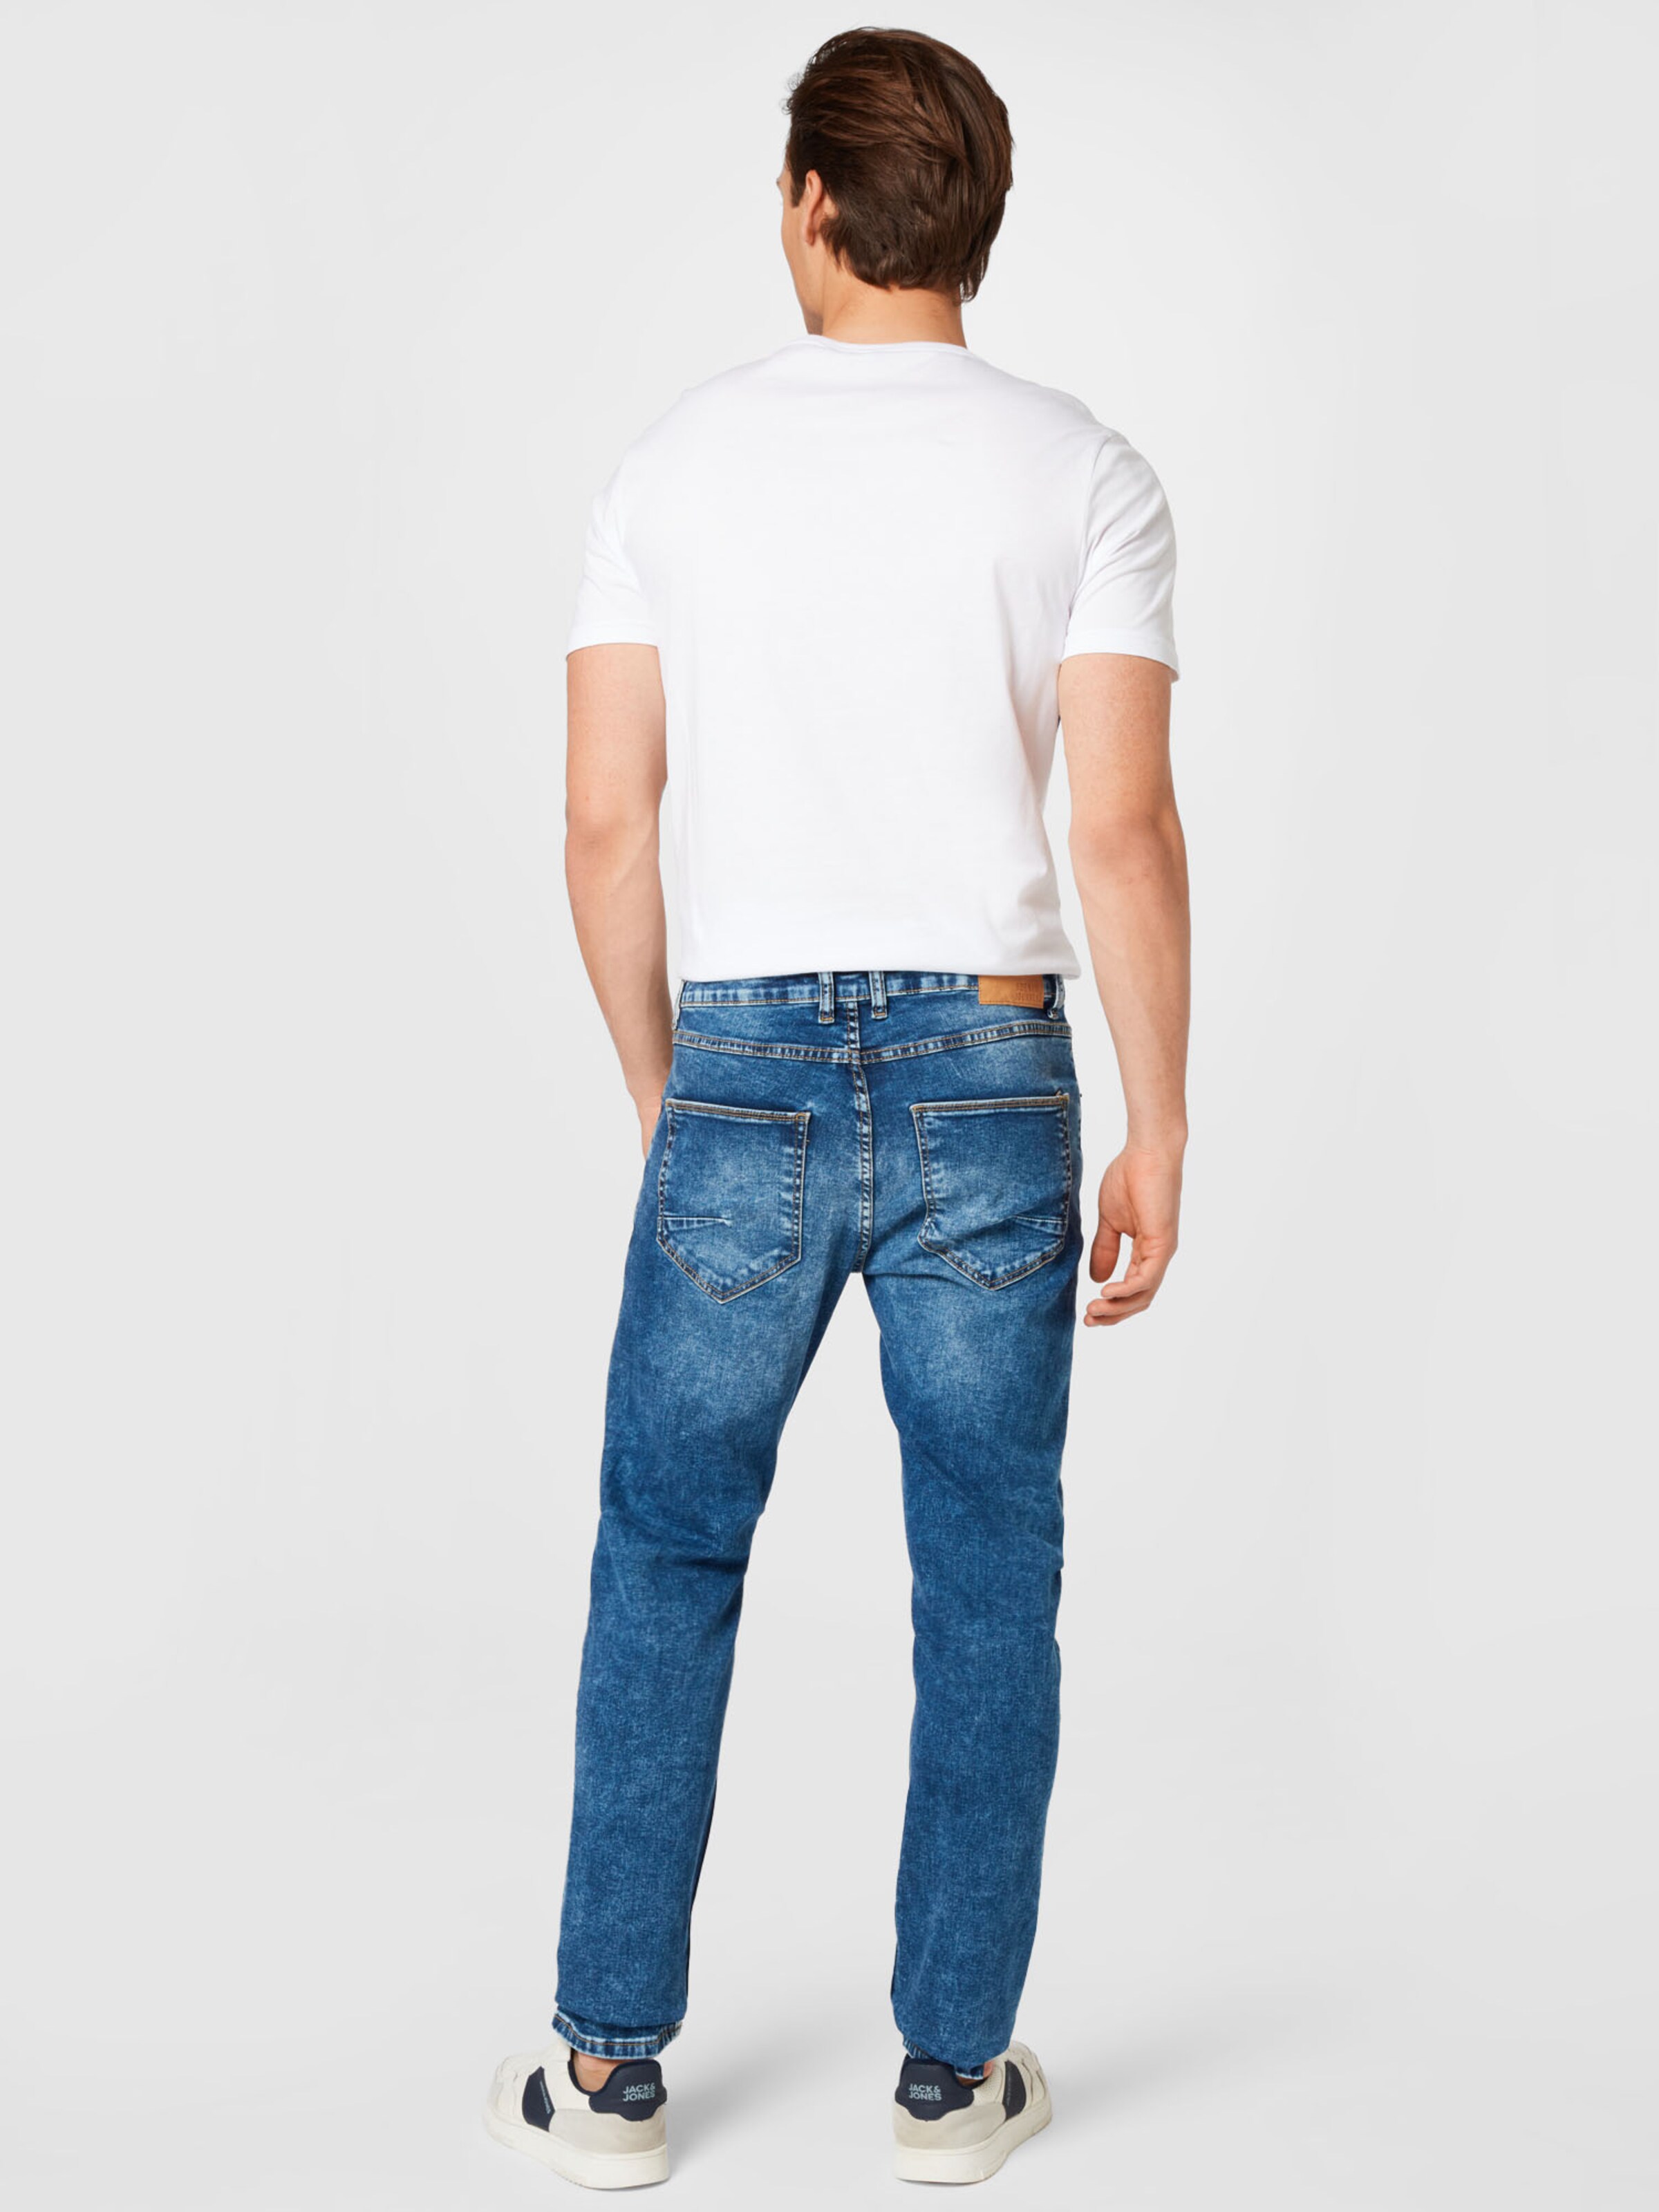 Männer Jeans  Solid Jeans in Blau - CU11383